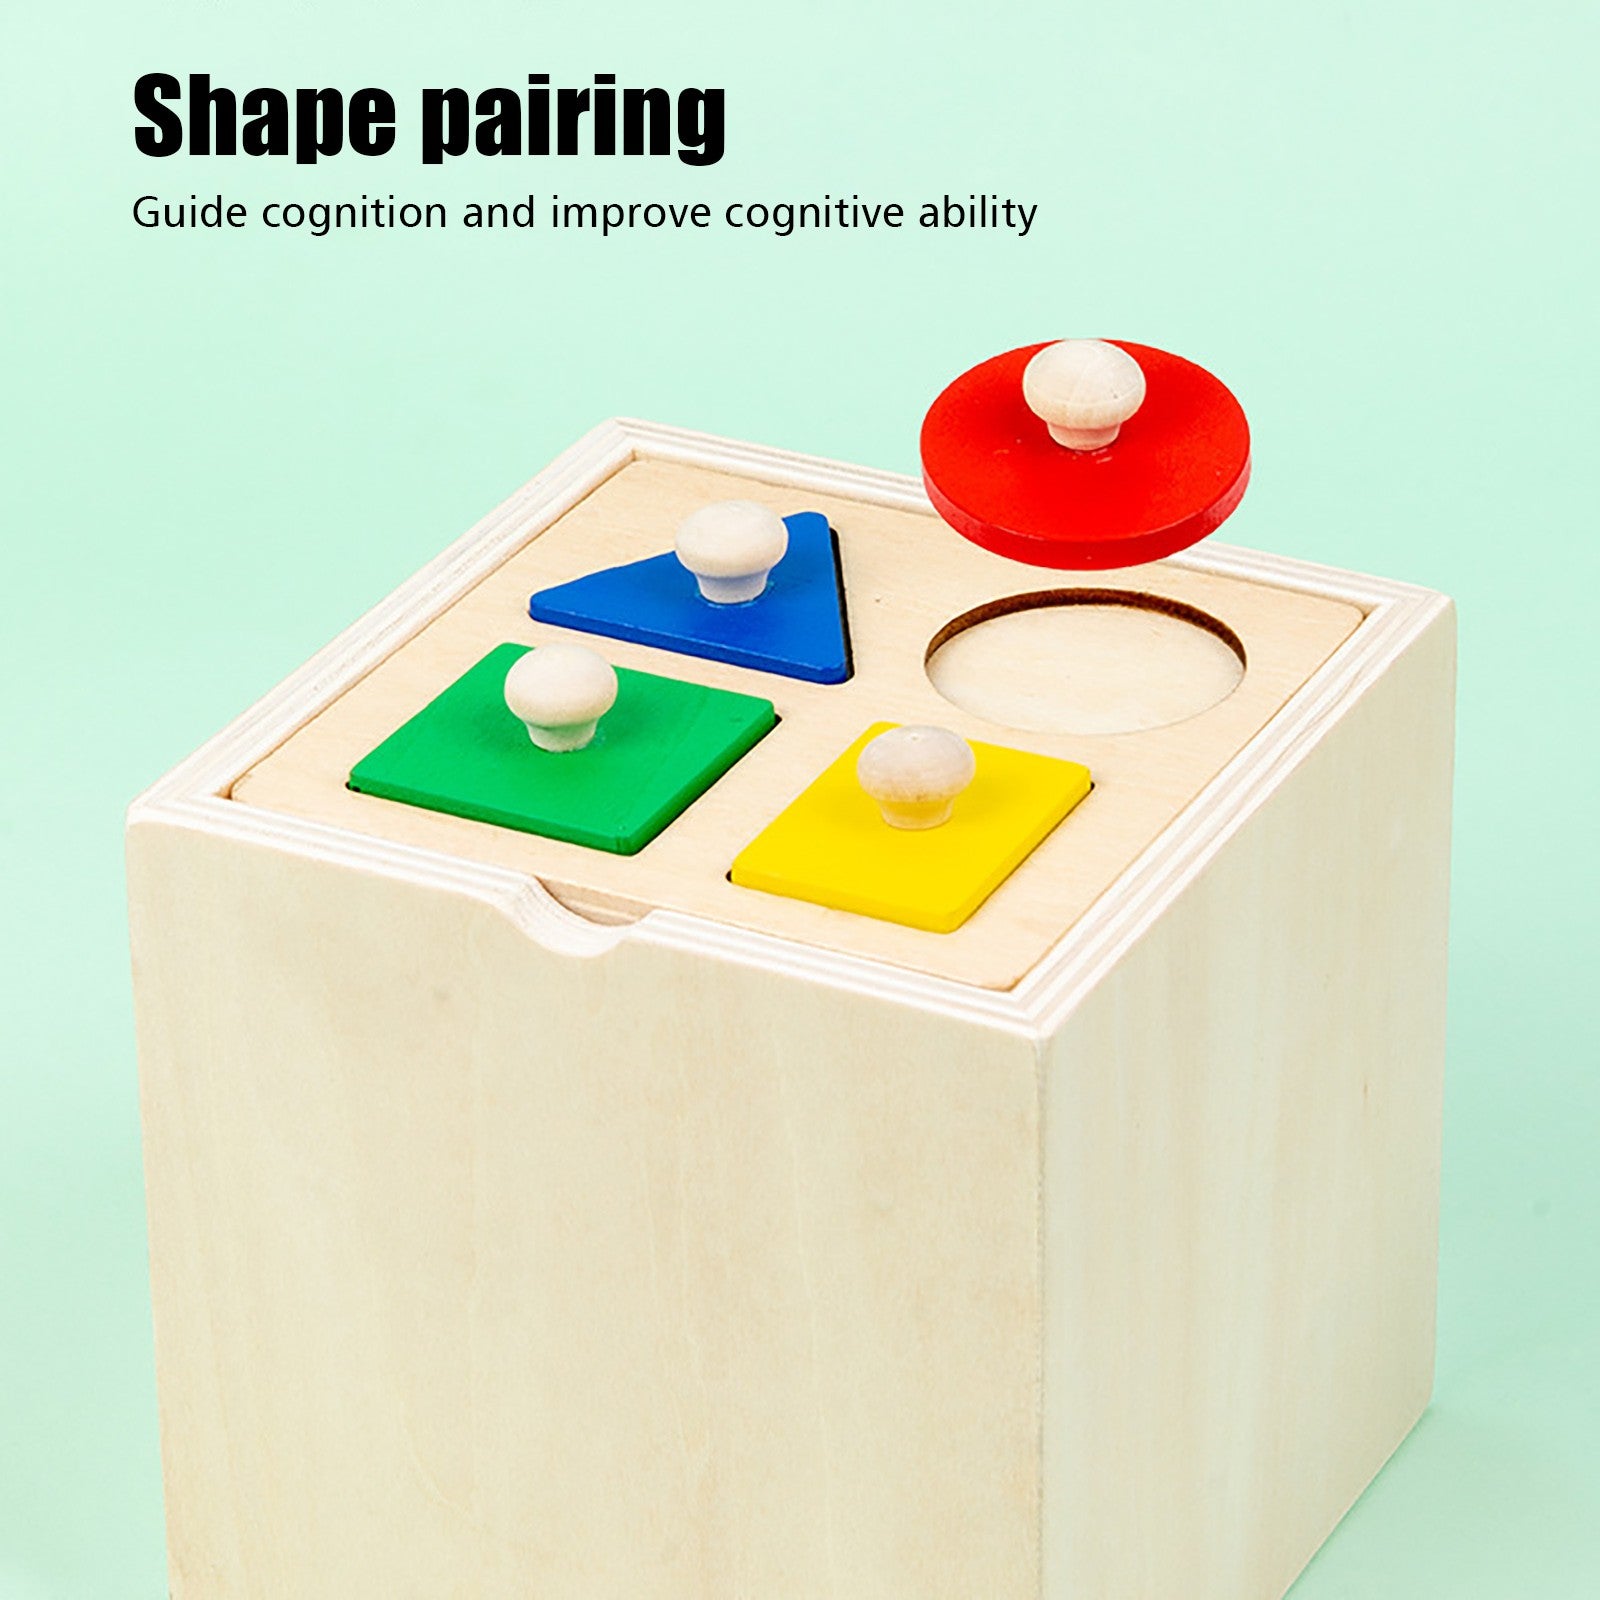 5-in-1 Montessori Wooden Puzzle Box Toy Set - Taylorson